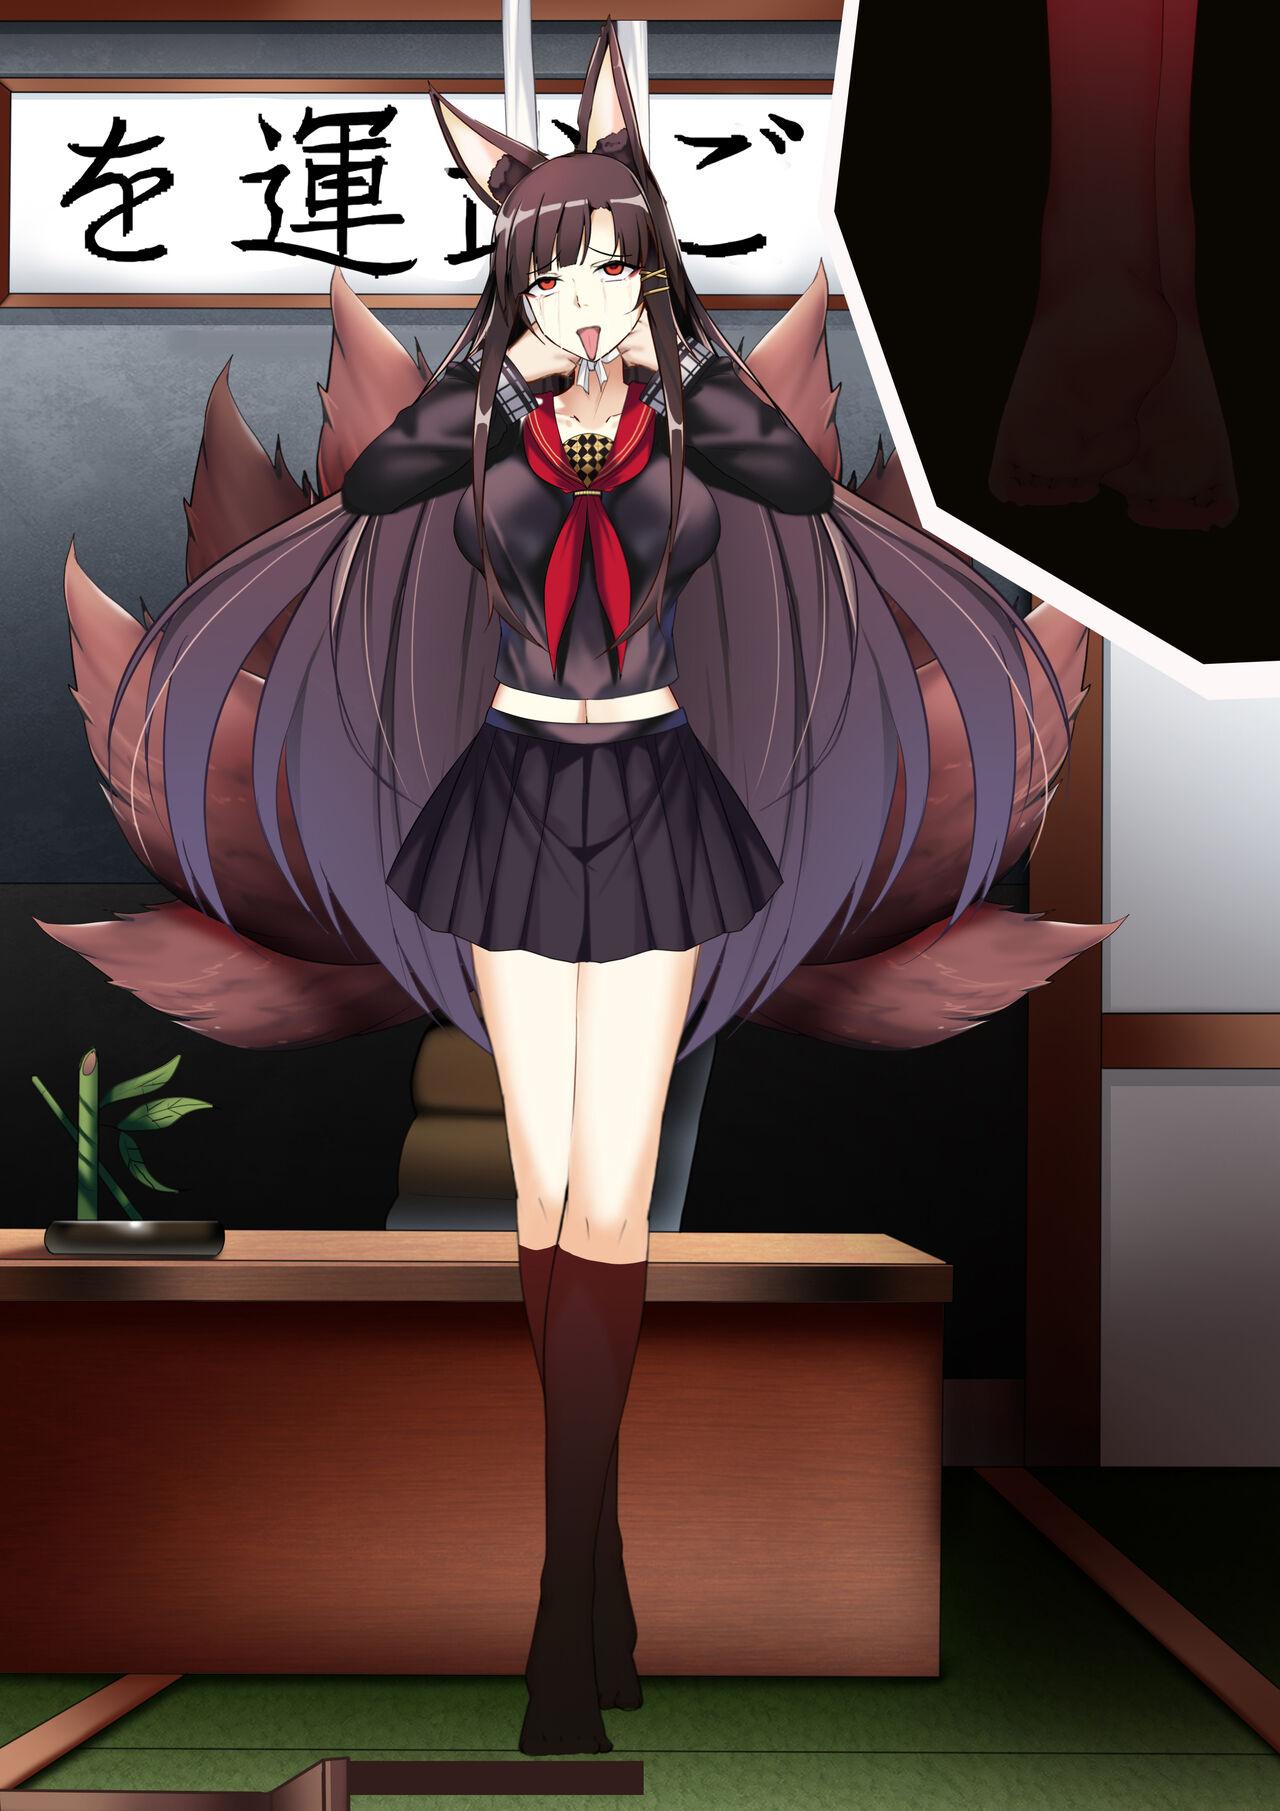 Akagi hanged herself in her office 113